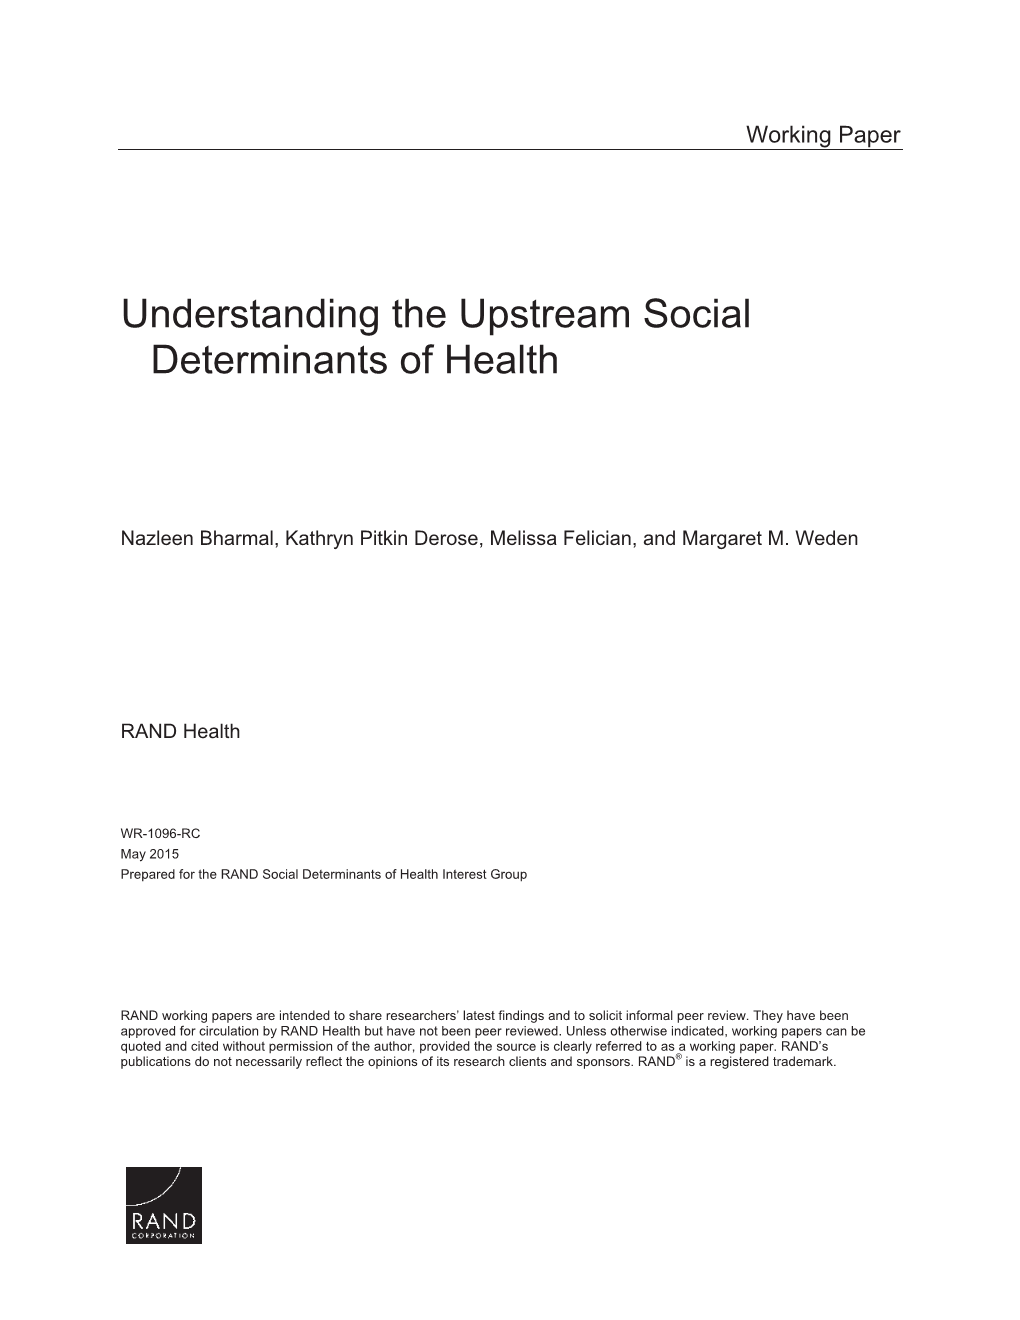 Understanding the Upstream Social Determinants of Health